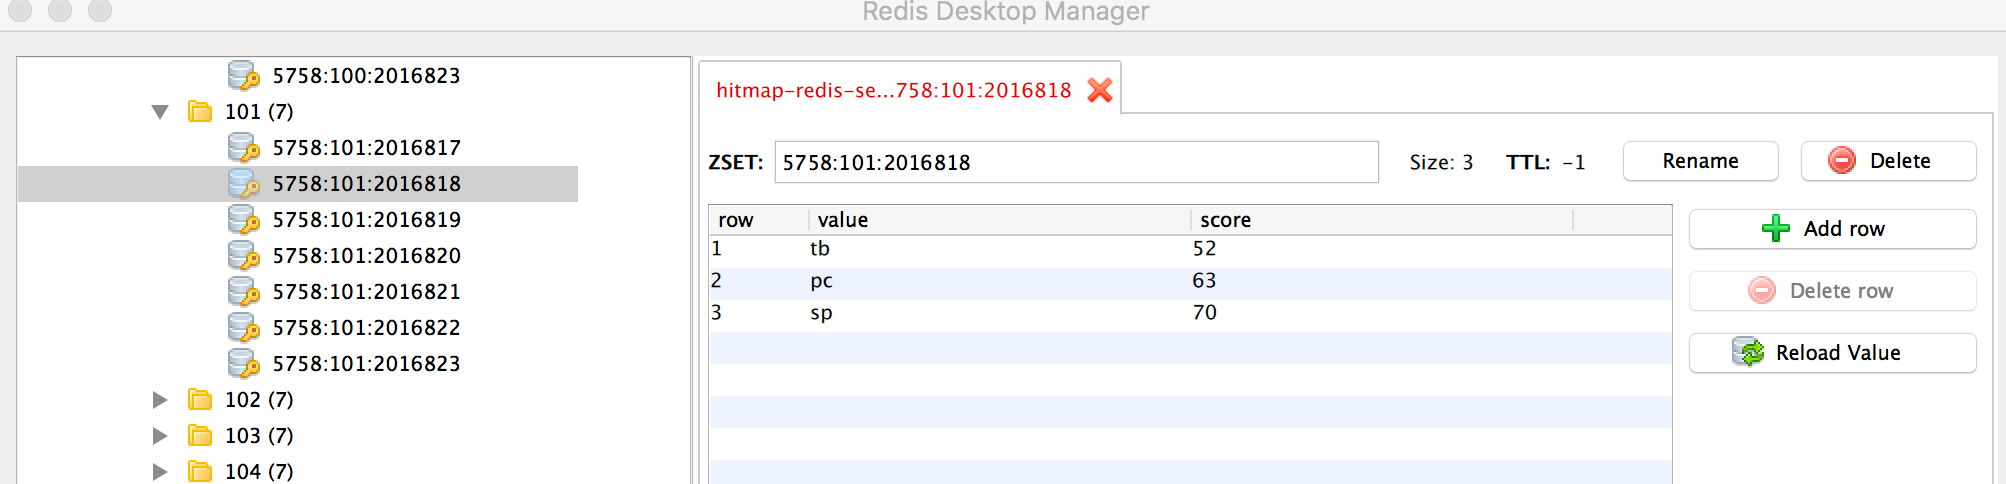 Redis_Desktop_Manager.png